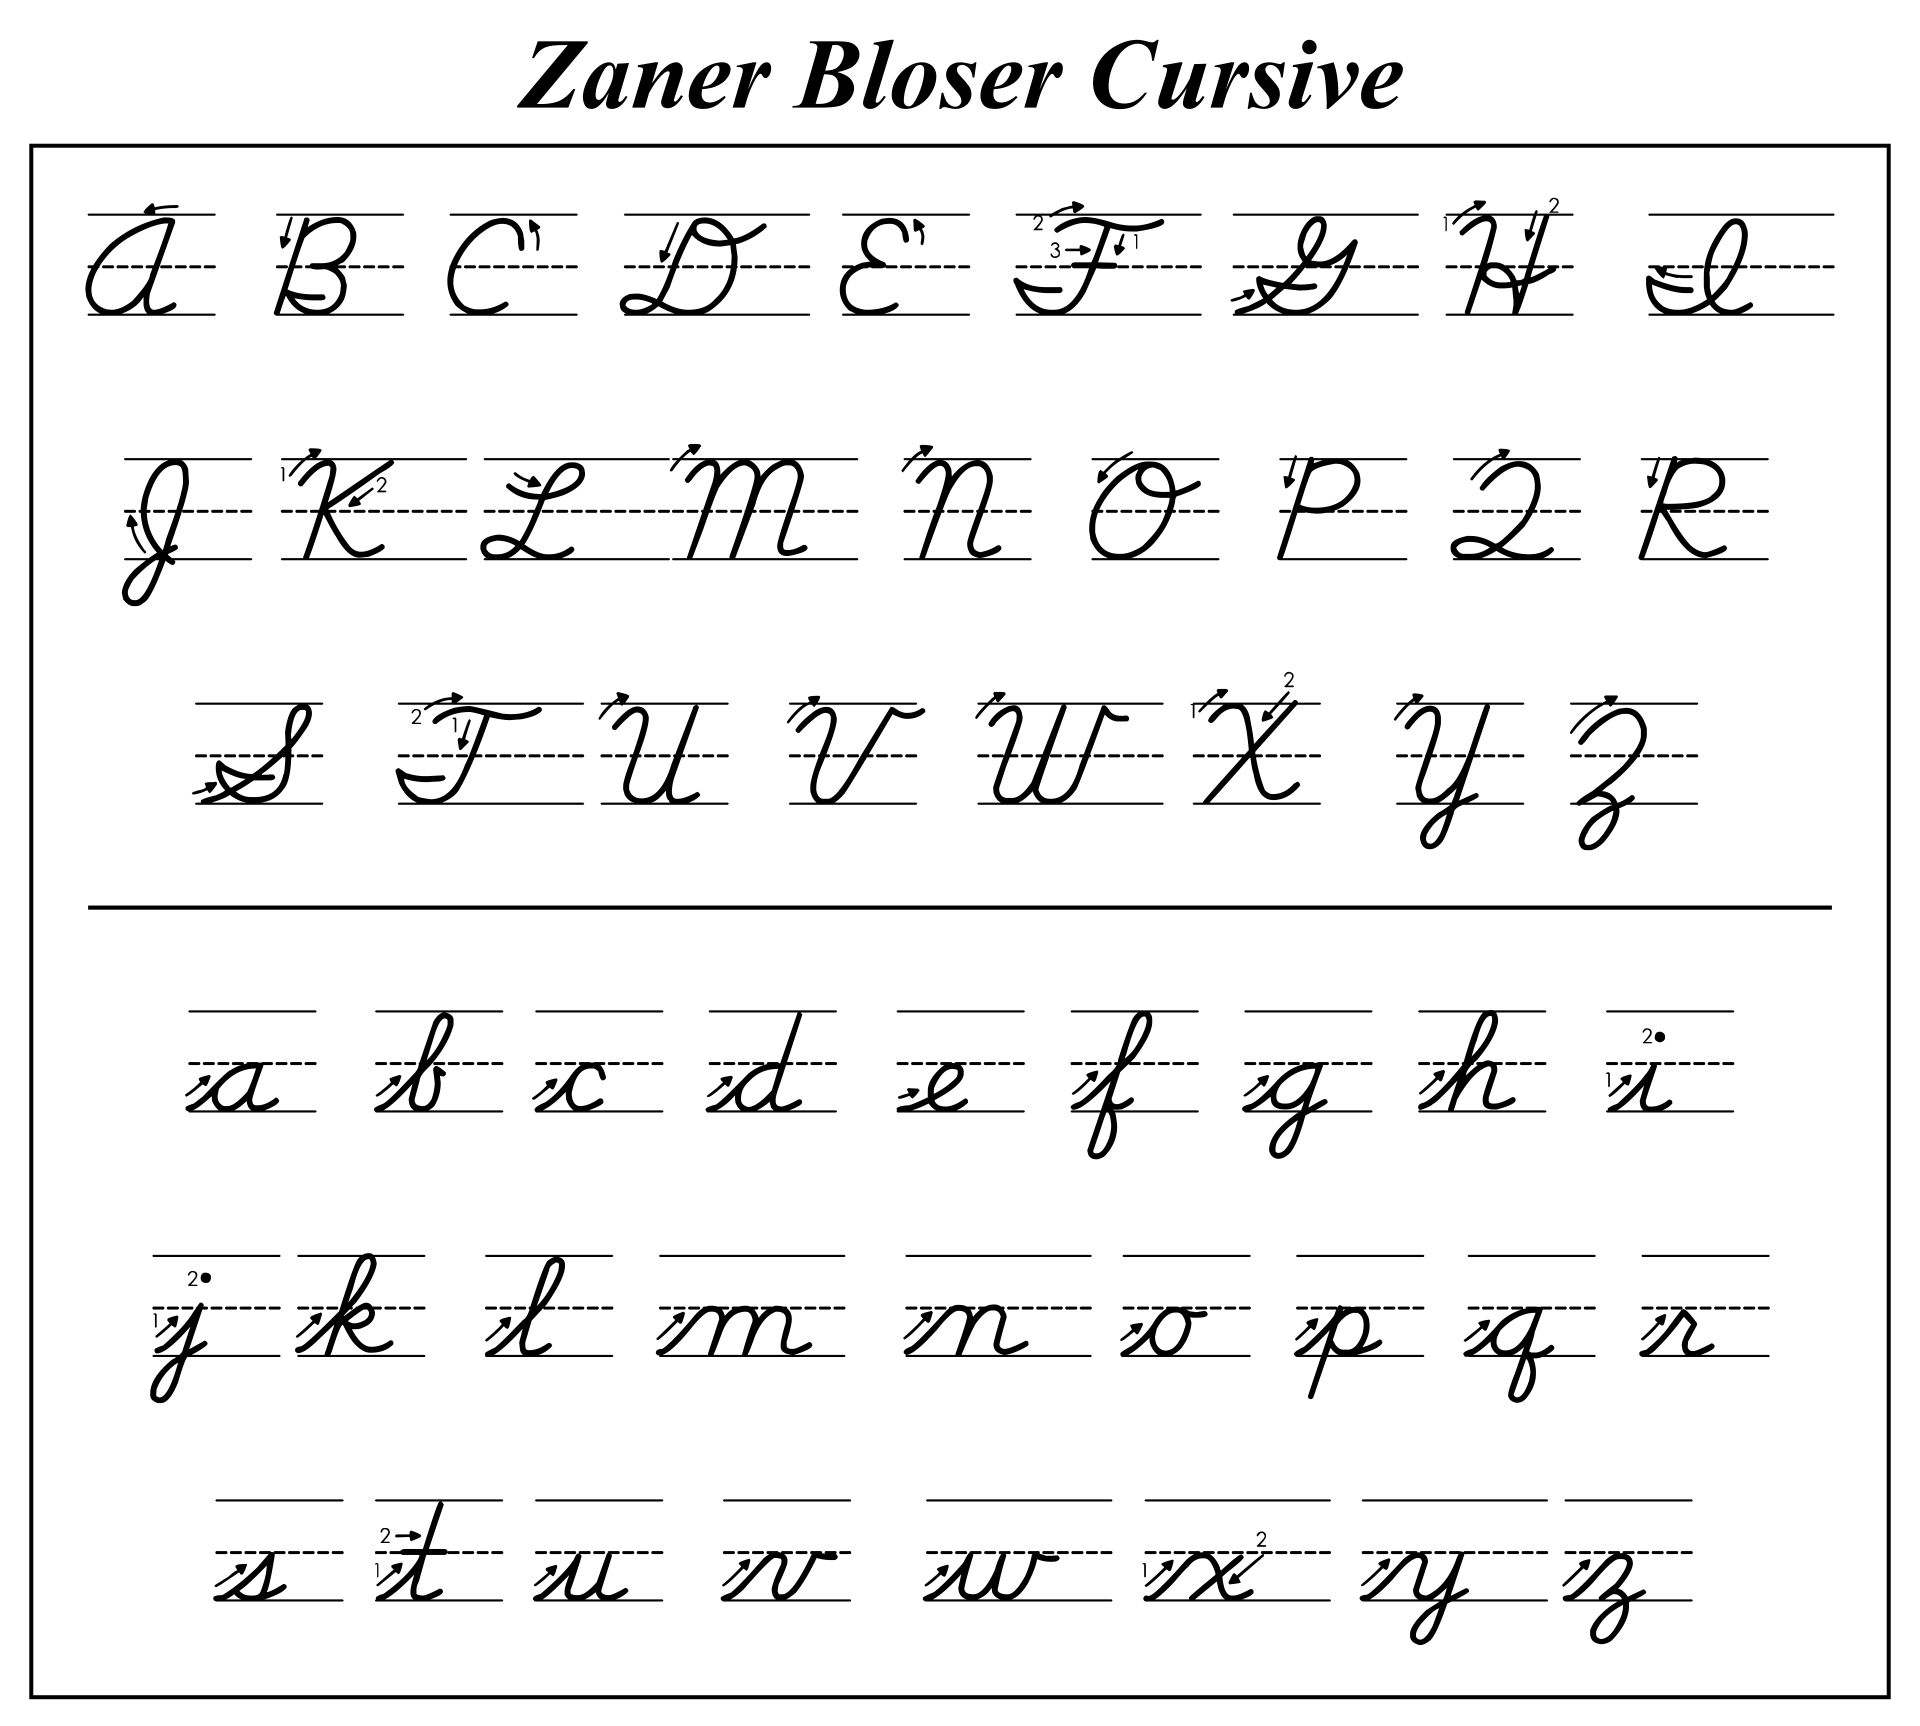 method of cursive writing